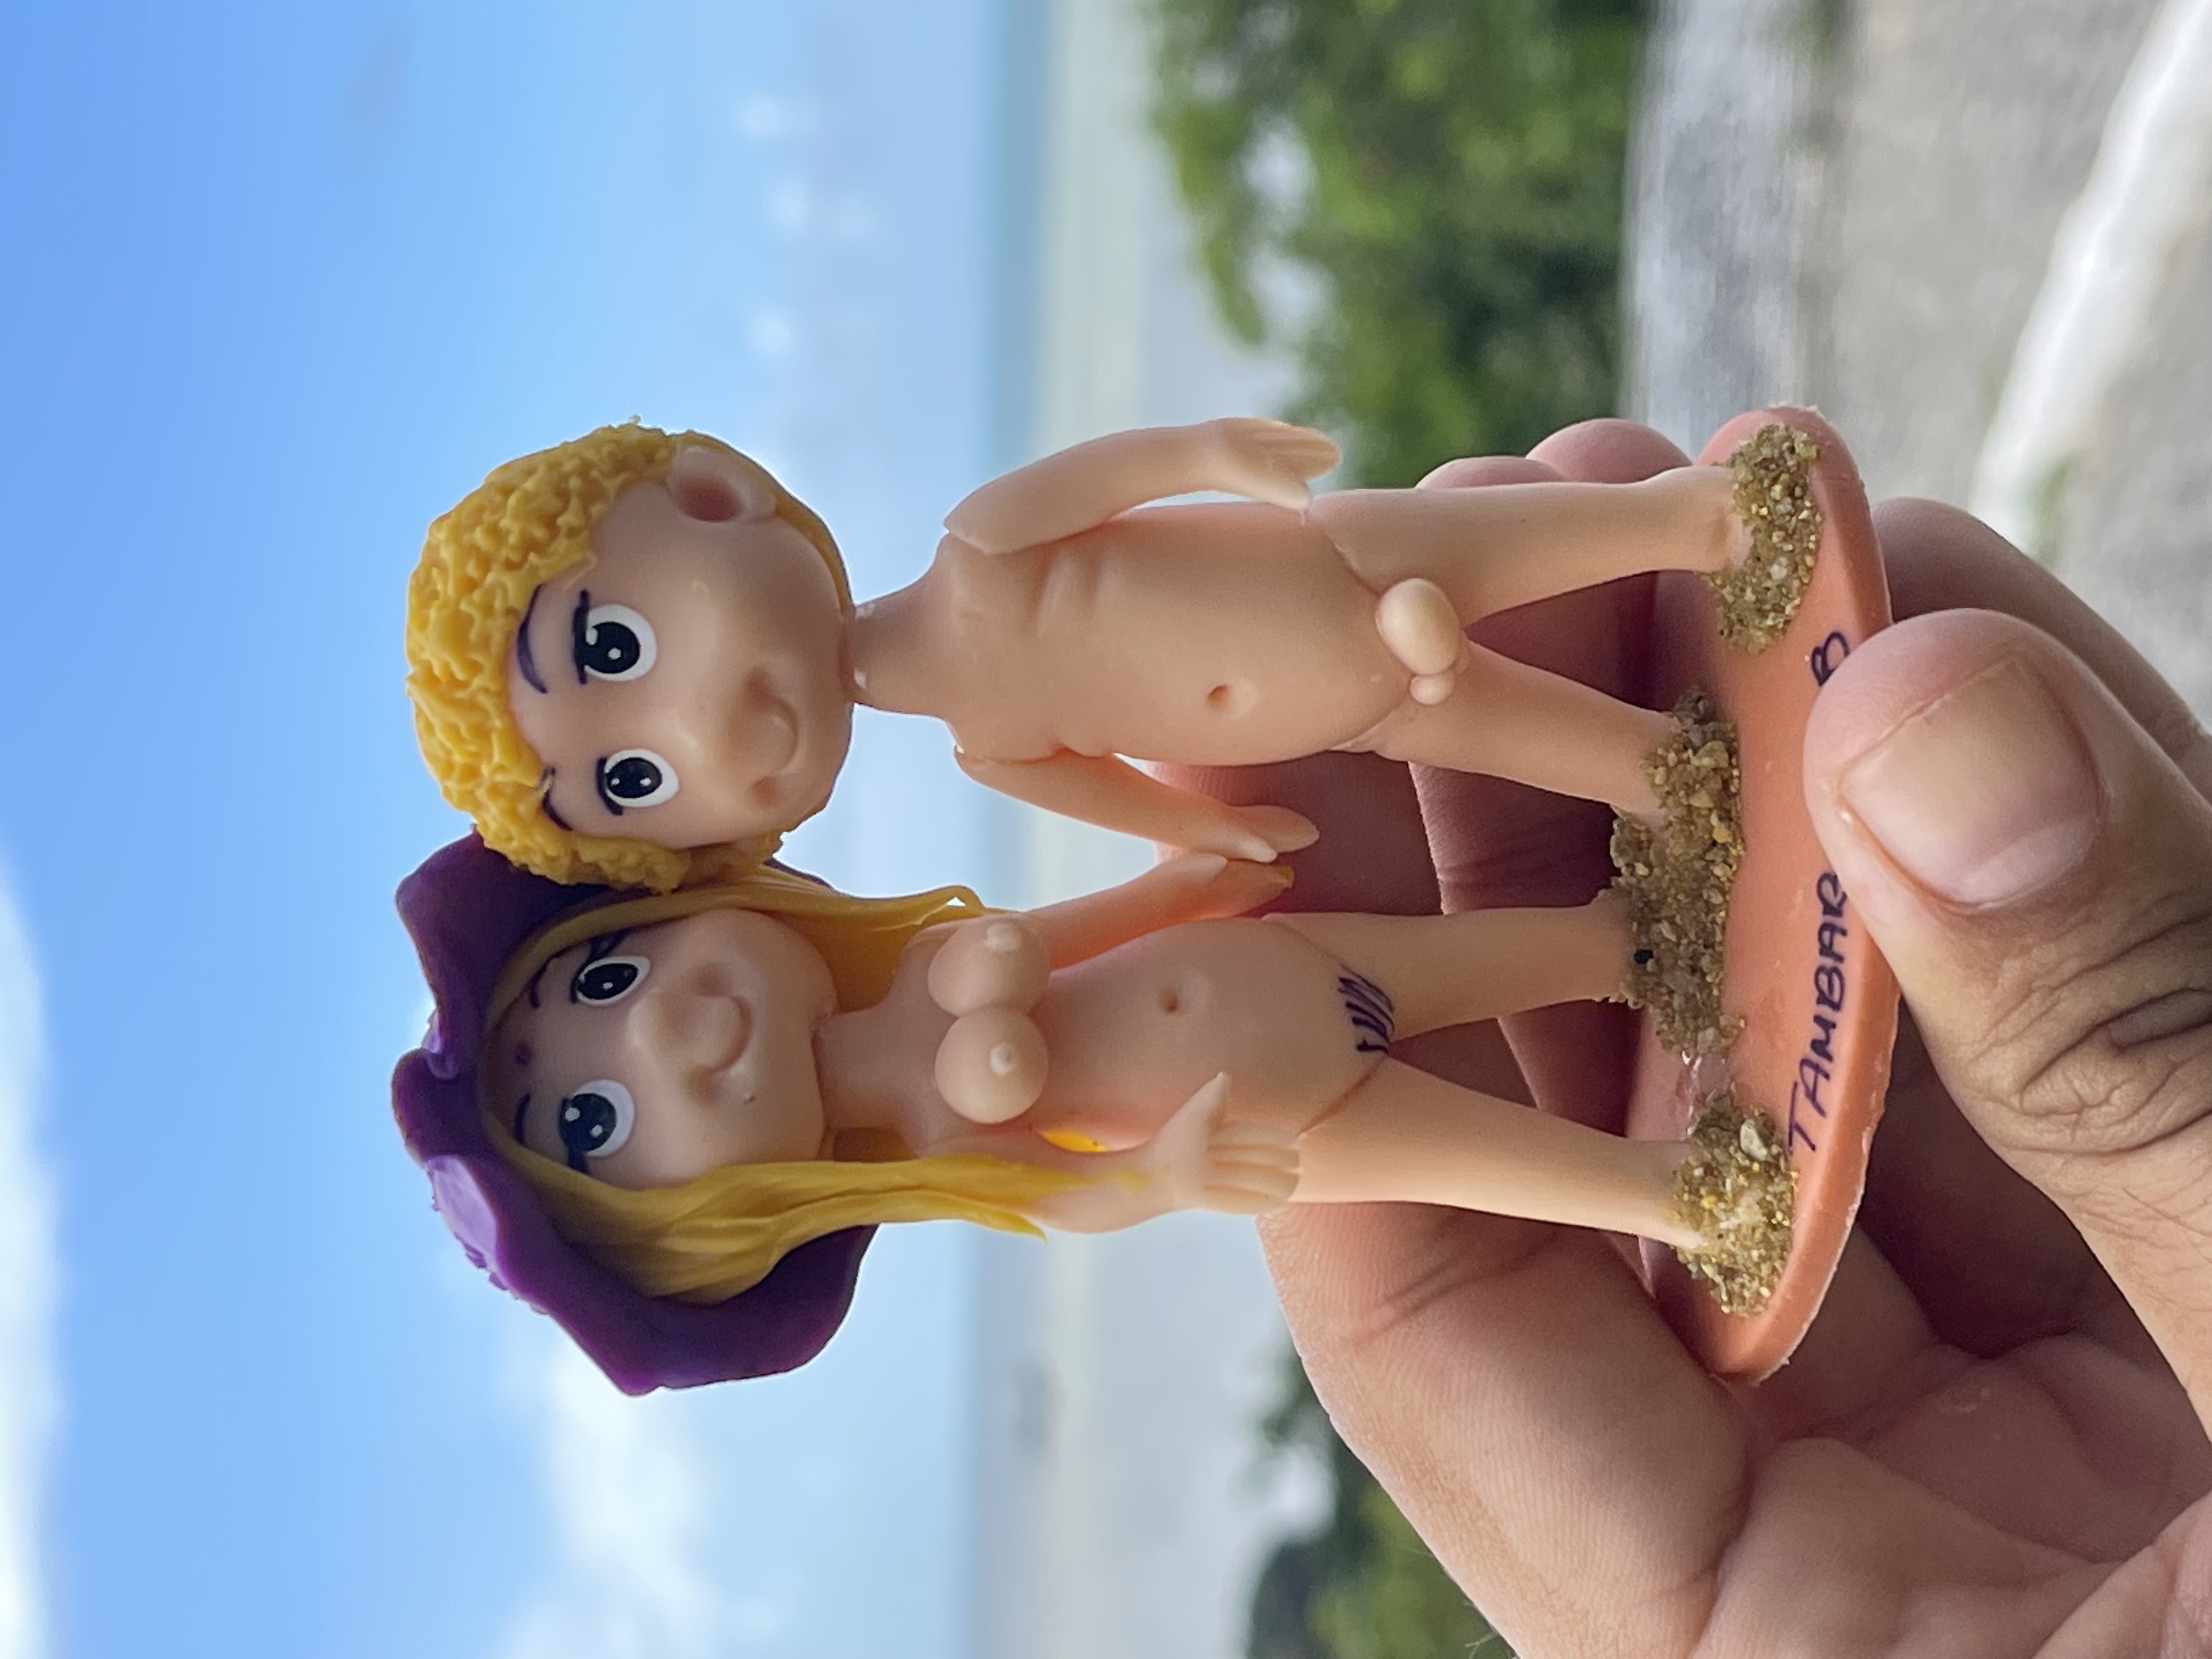 Os aventureiros Vitor Vianna e Franklin David se divertem com o souvenir na praia nudista de Tambaba, na Paraíba. Foto: Vitor Vianna